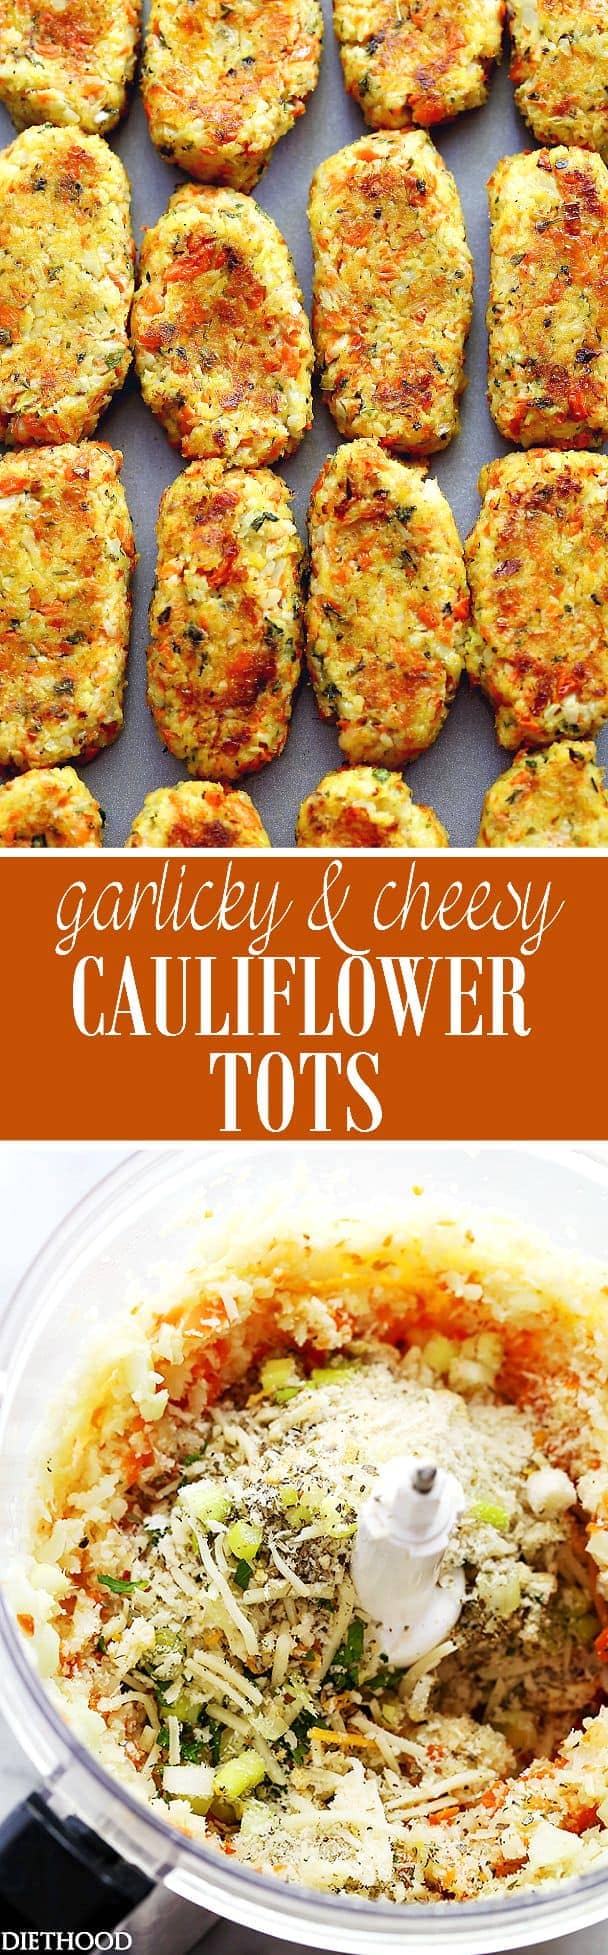 Garlicky & Cheesy Carrots and Cauliflower Tots Recipe | Diethood